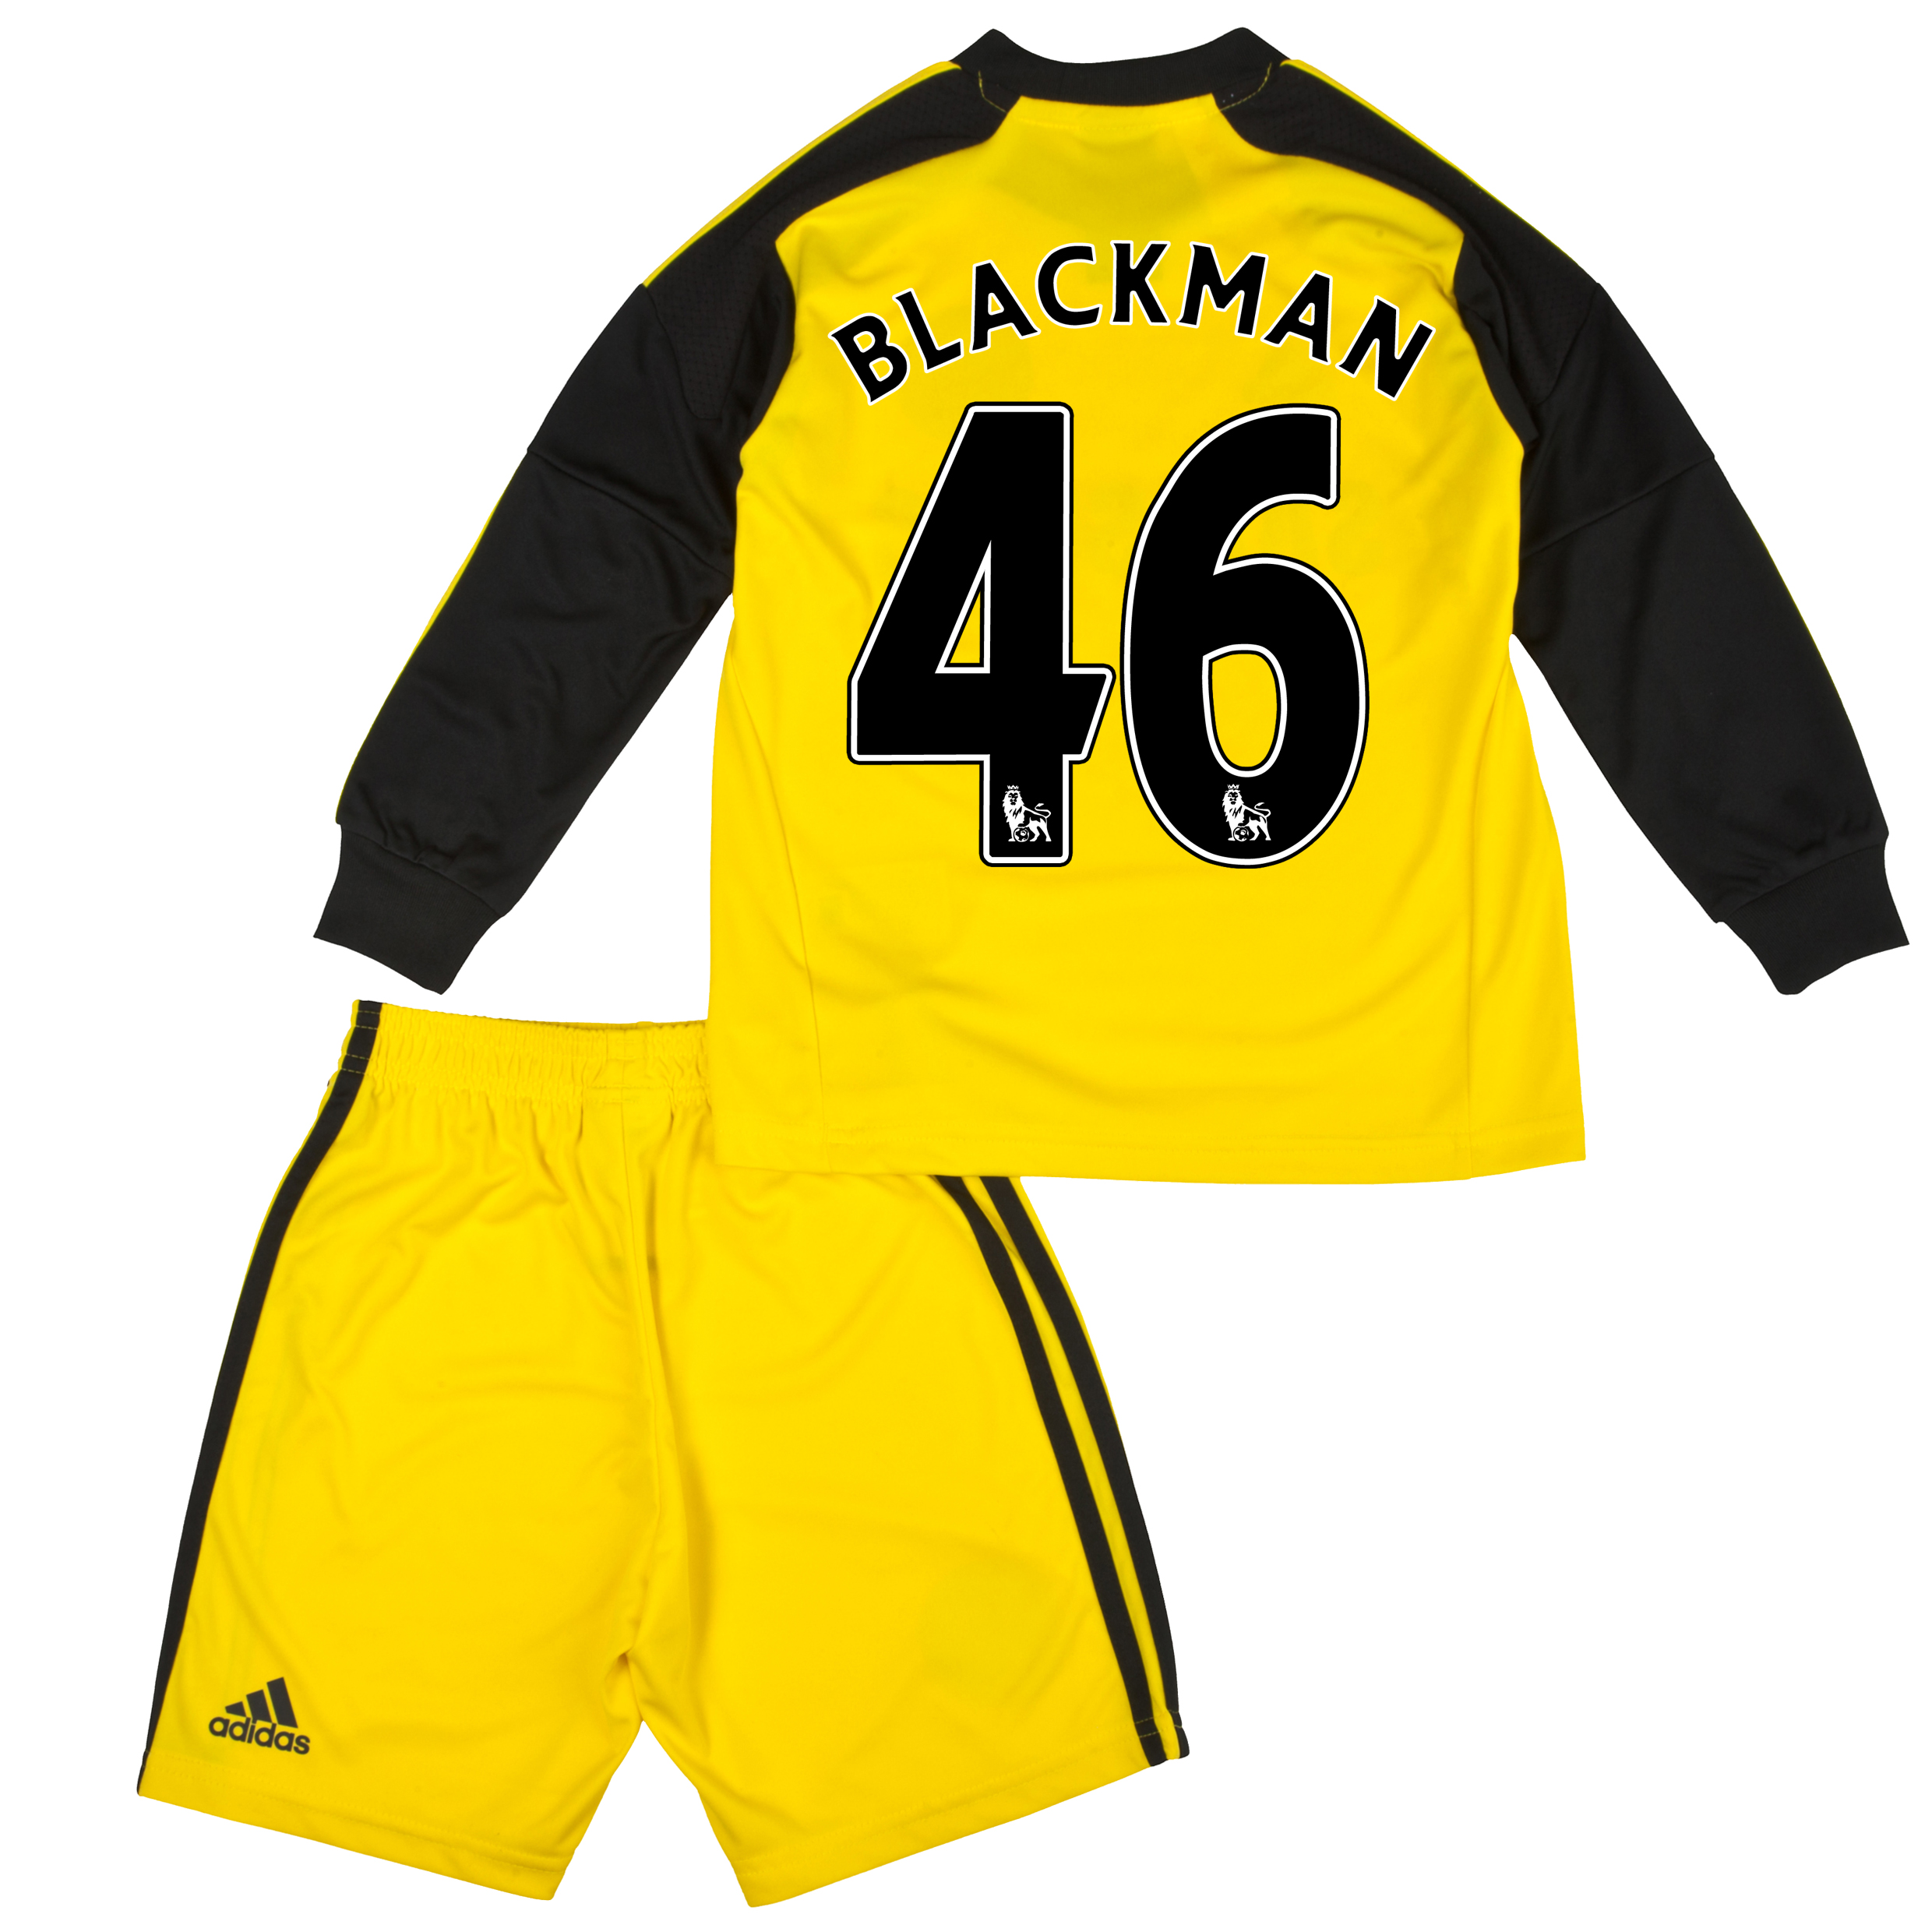 Chelsea Home Goalkeeper Mini Kit 2013/14 with Blackman 46 printing